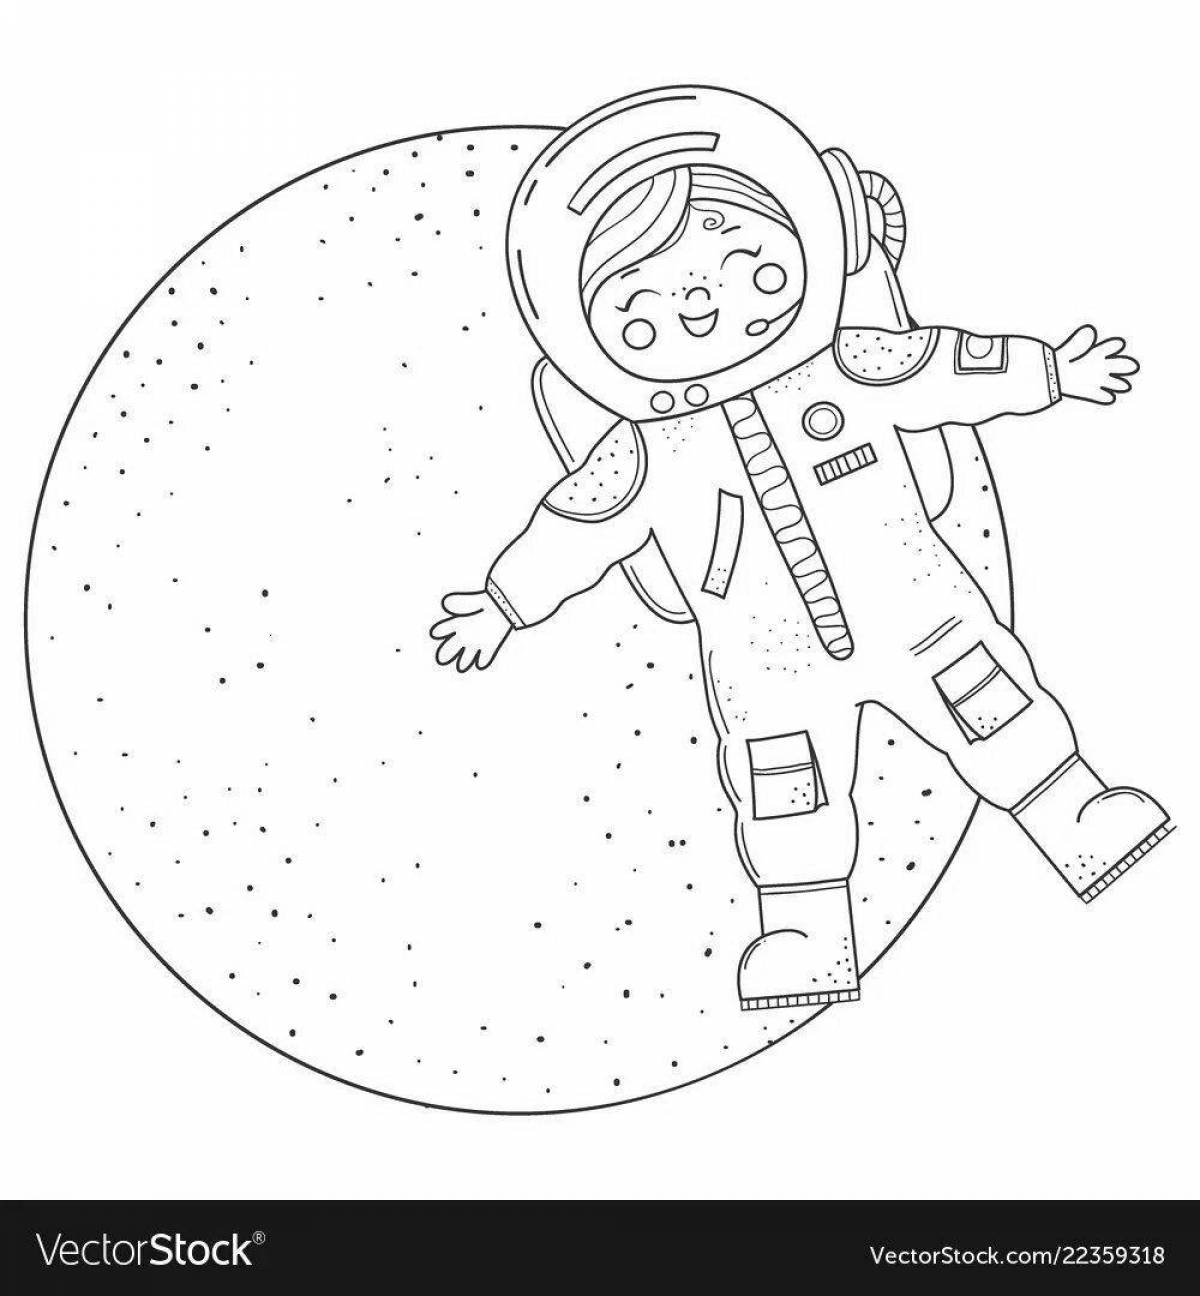 Cosmonaut for kids #8